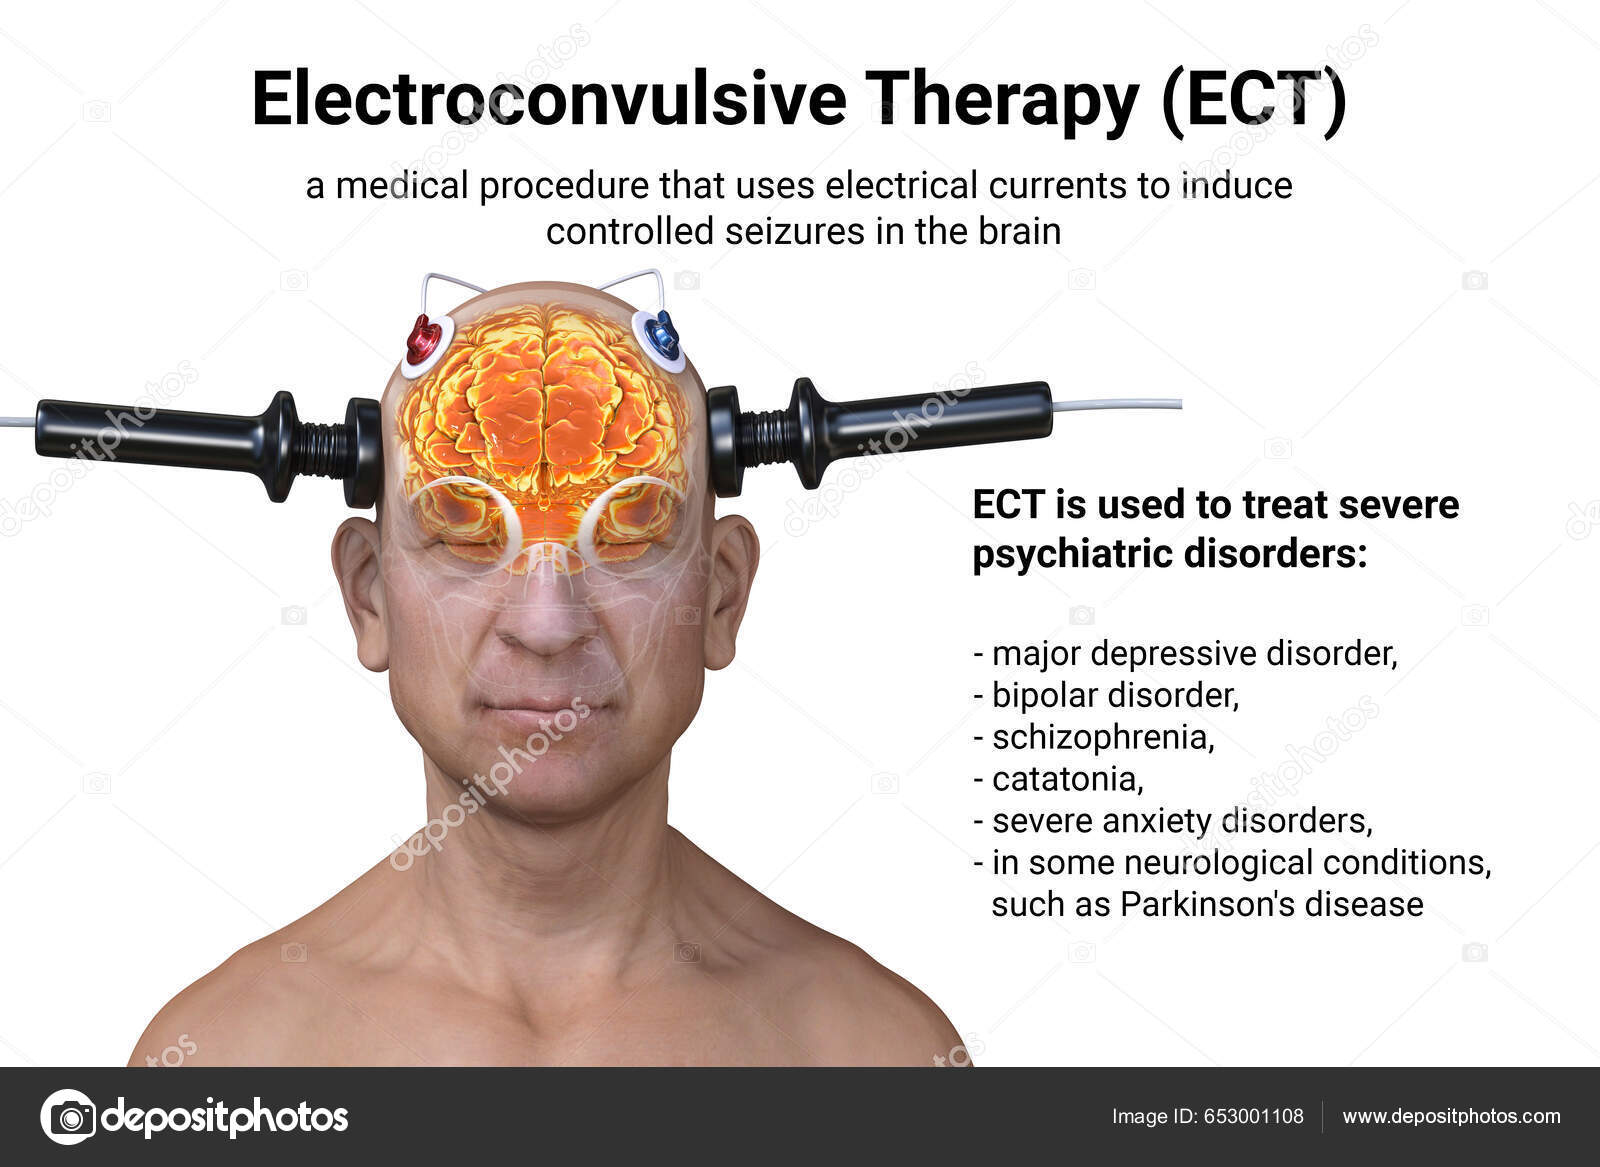 https://st5.depositphotos.com/5316818/65300/i/1600/depositphotos_653001108-stock-photo-electroconvulsive-therapy-ect-treatment-used.jpg